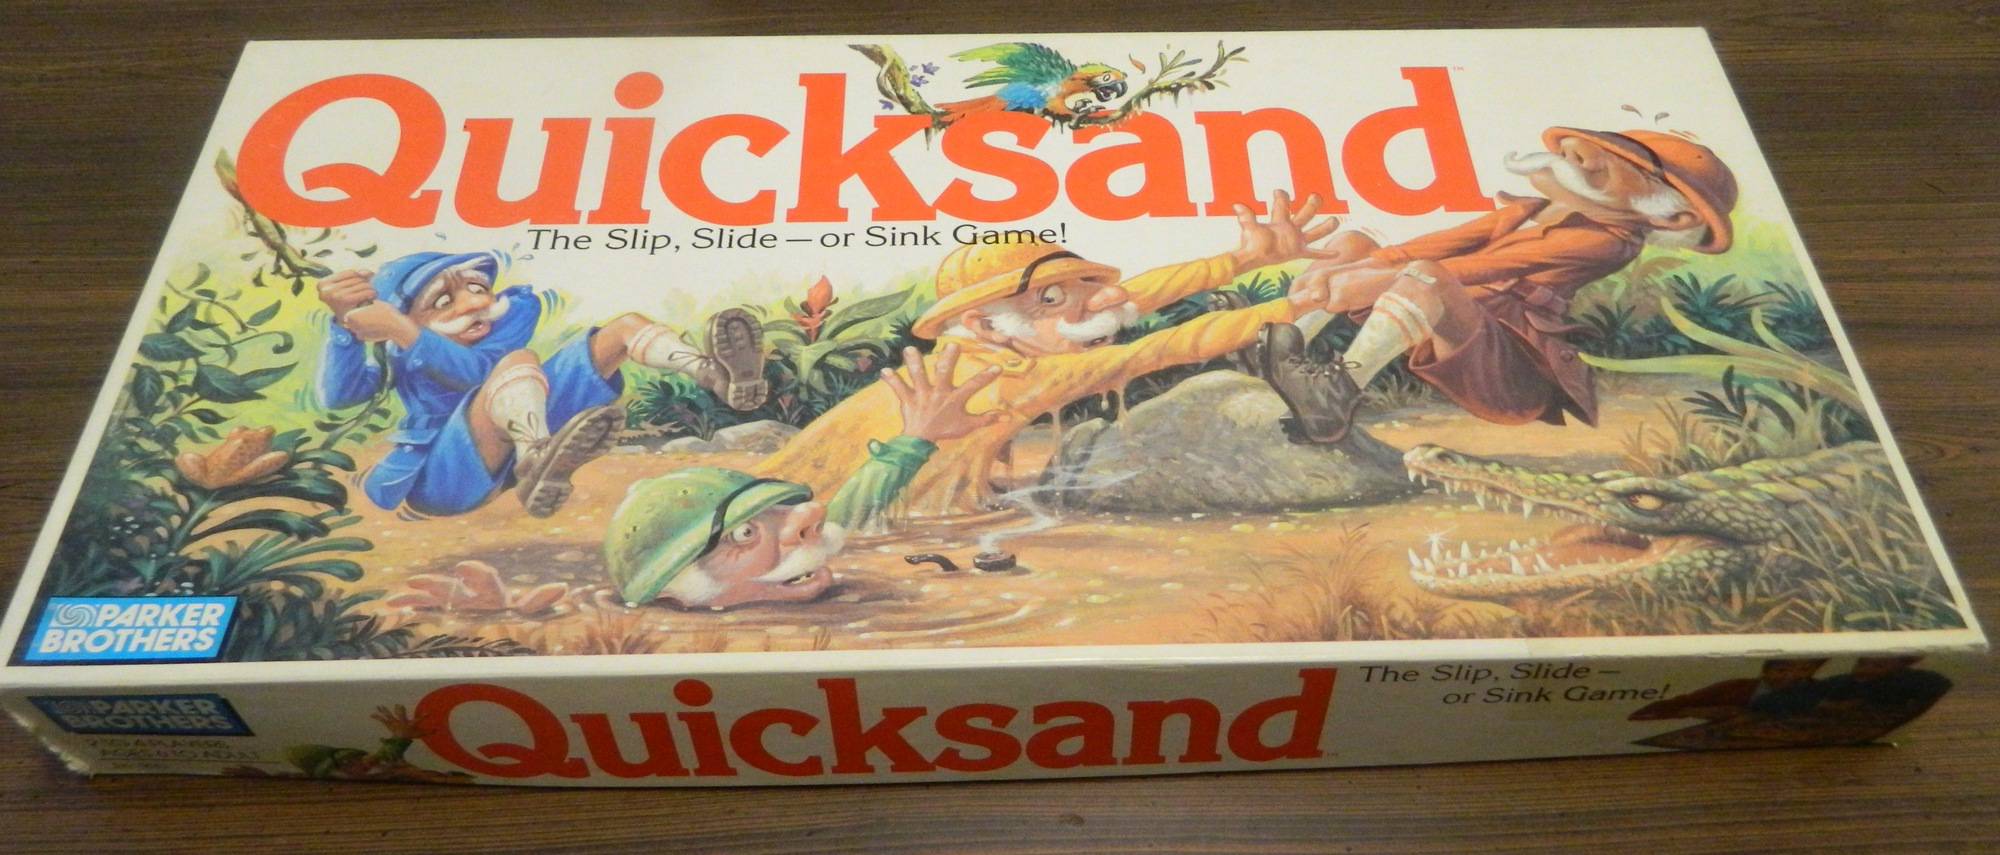 Box for Quicksand